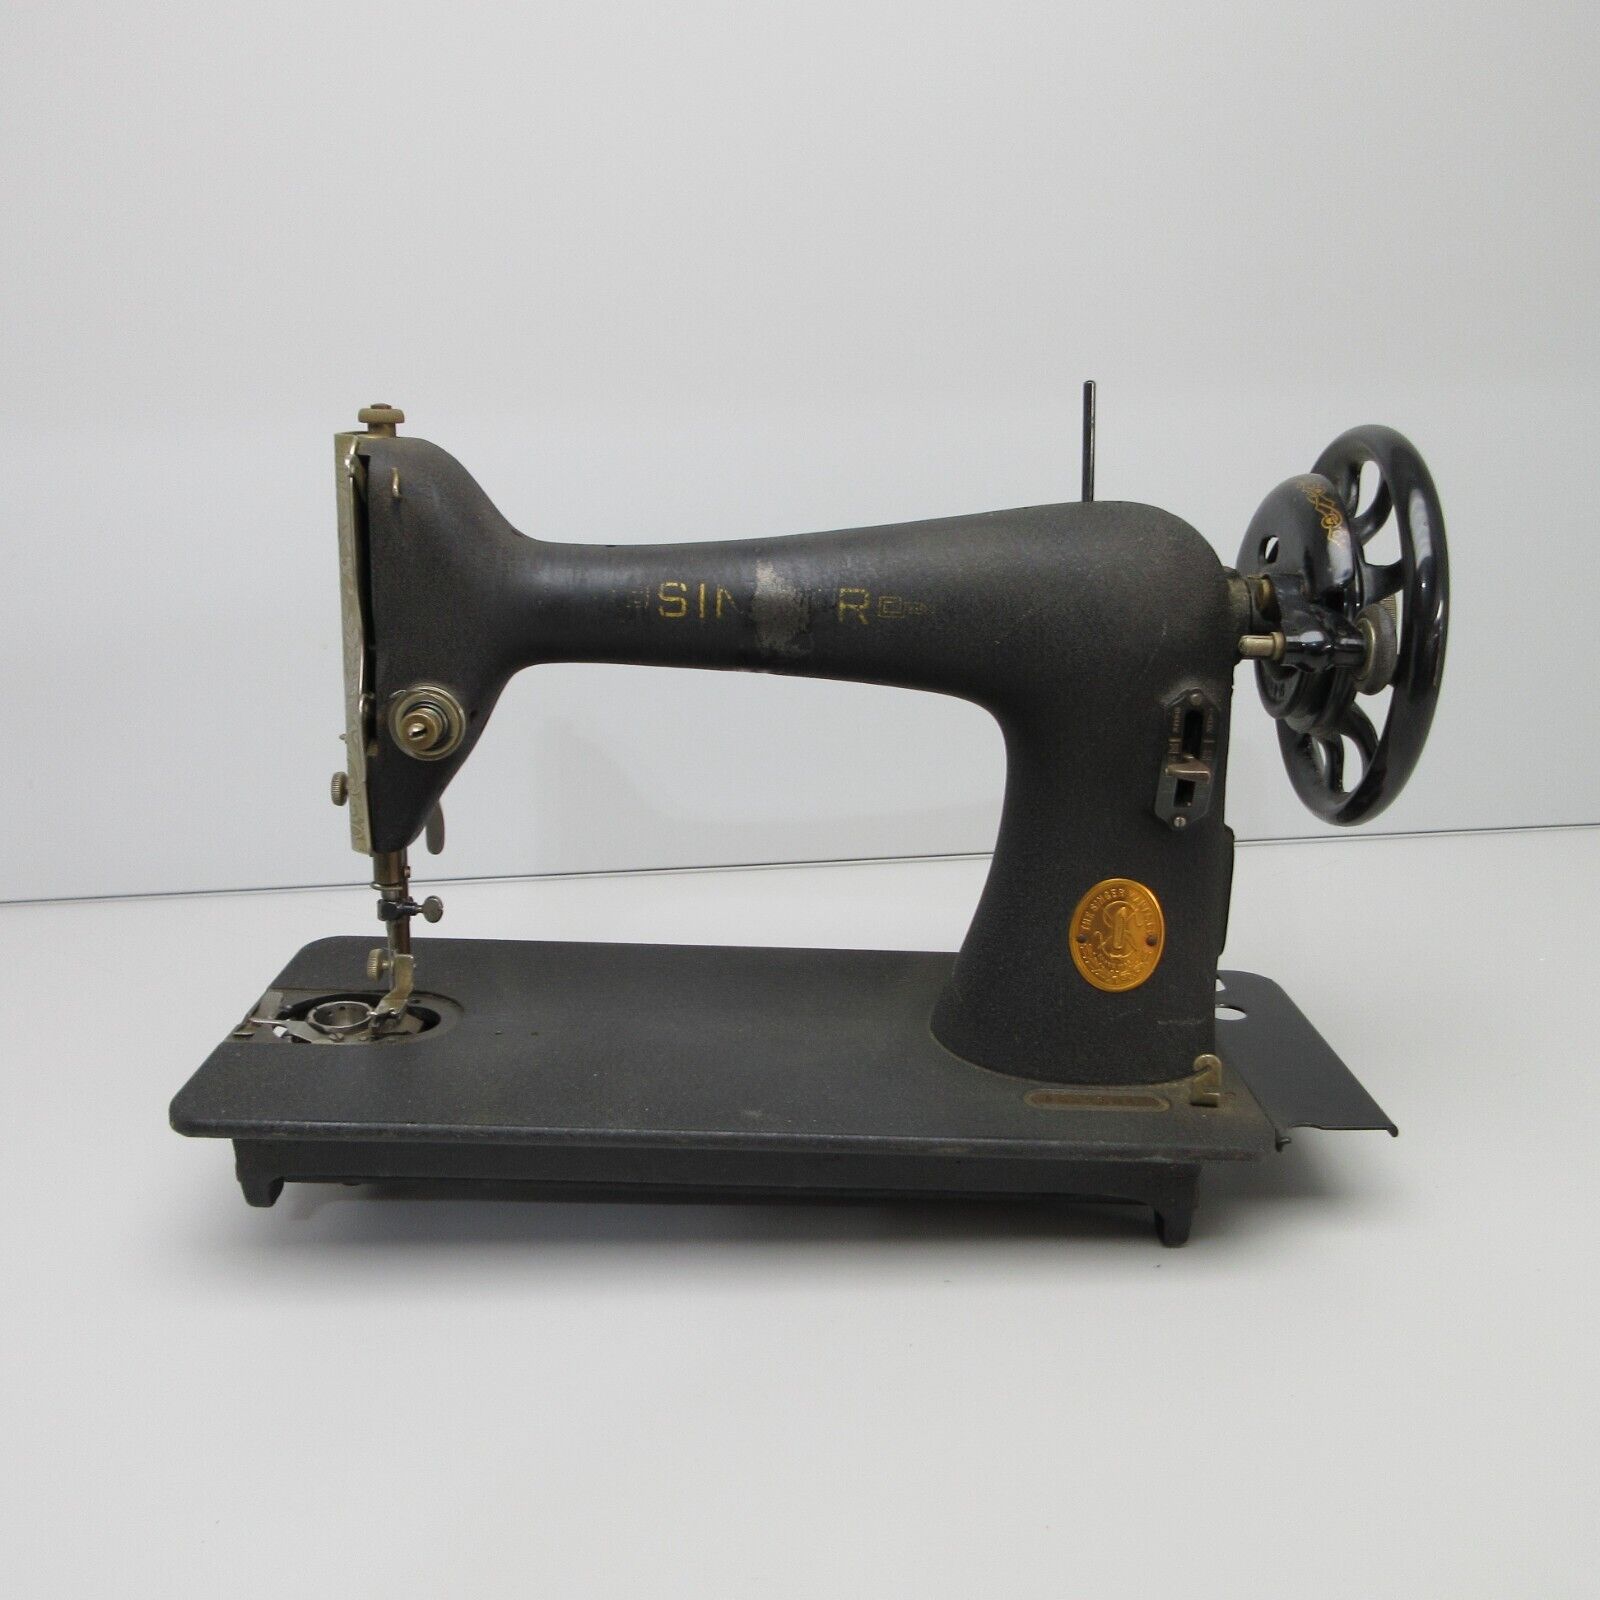 Vintage Singer Treadle Sewing Machine - 1941 Model 66